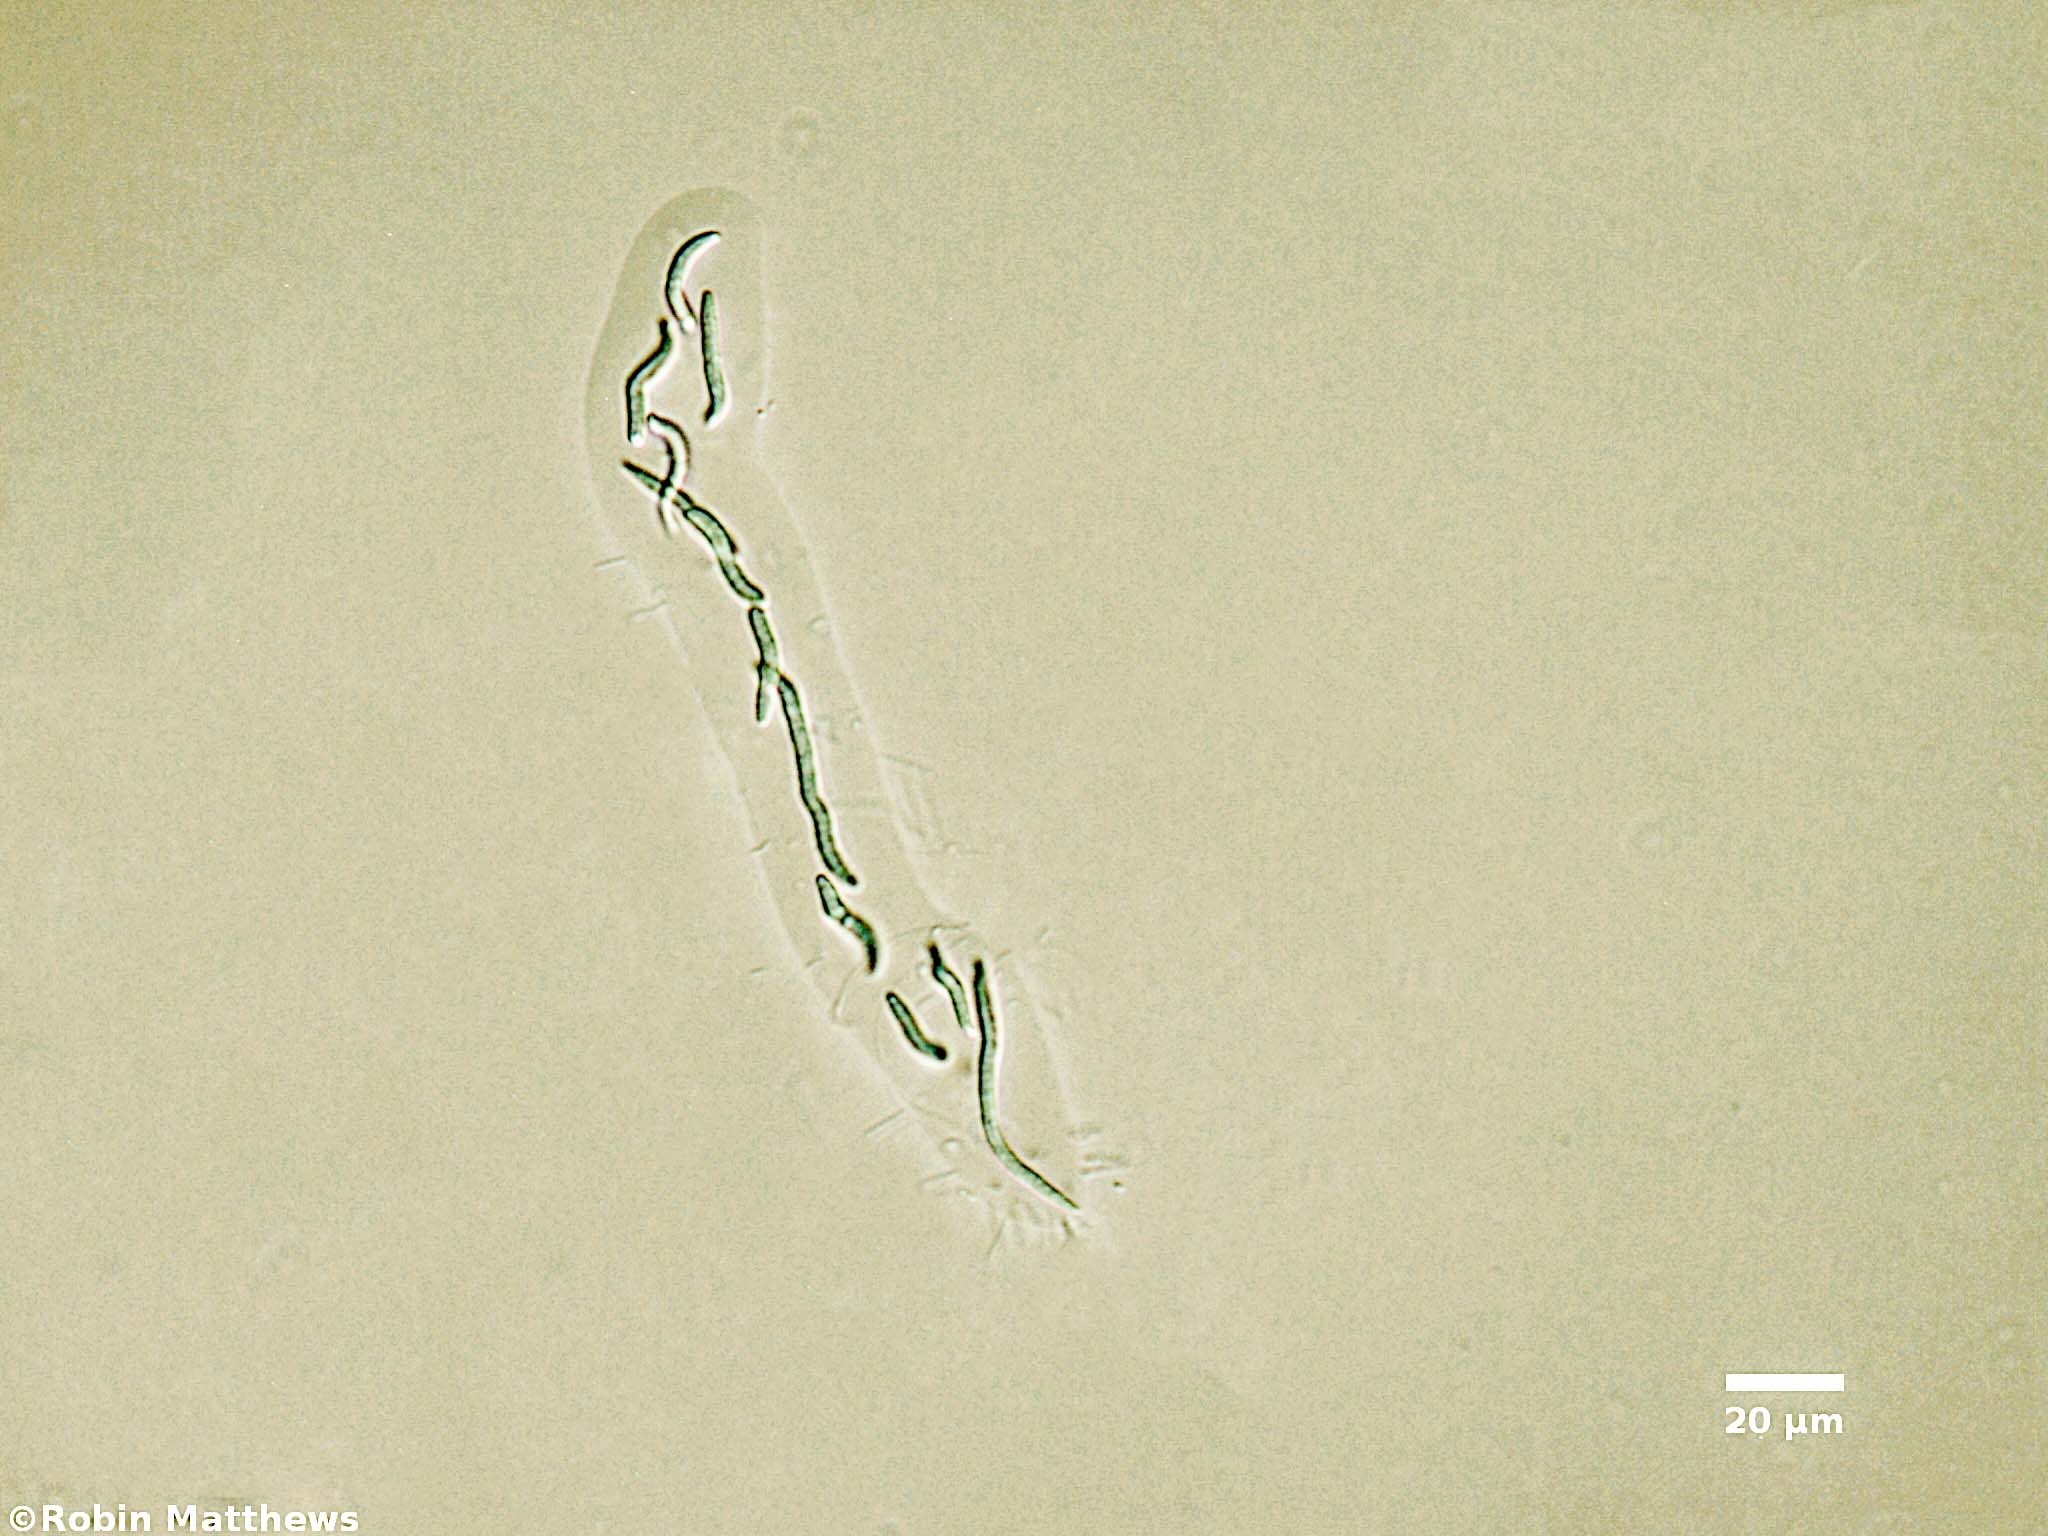 ./Cyanobacteria/Synechococcales/Synechococcaceae/Rhabdoderma/lineare/rhabdoderma-lineare-69.jpg